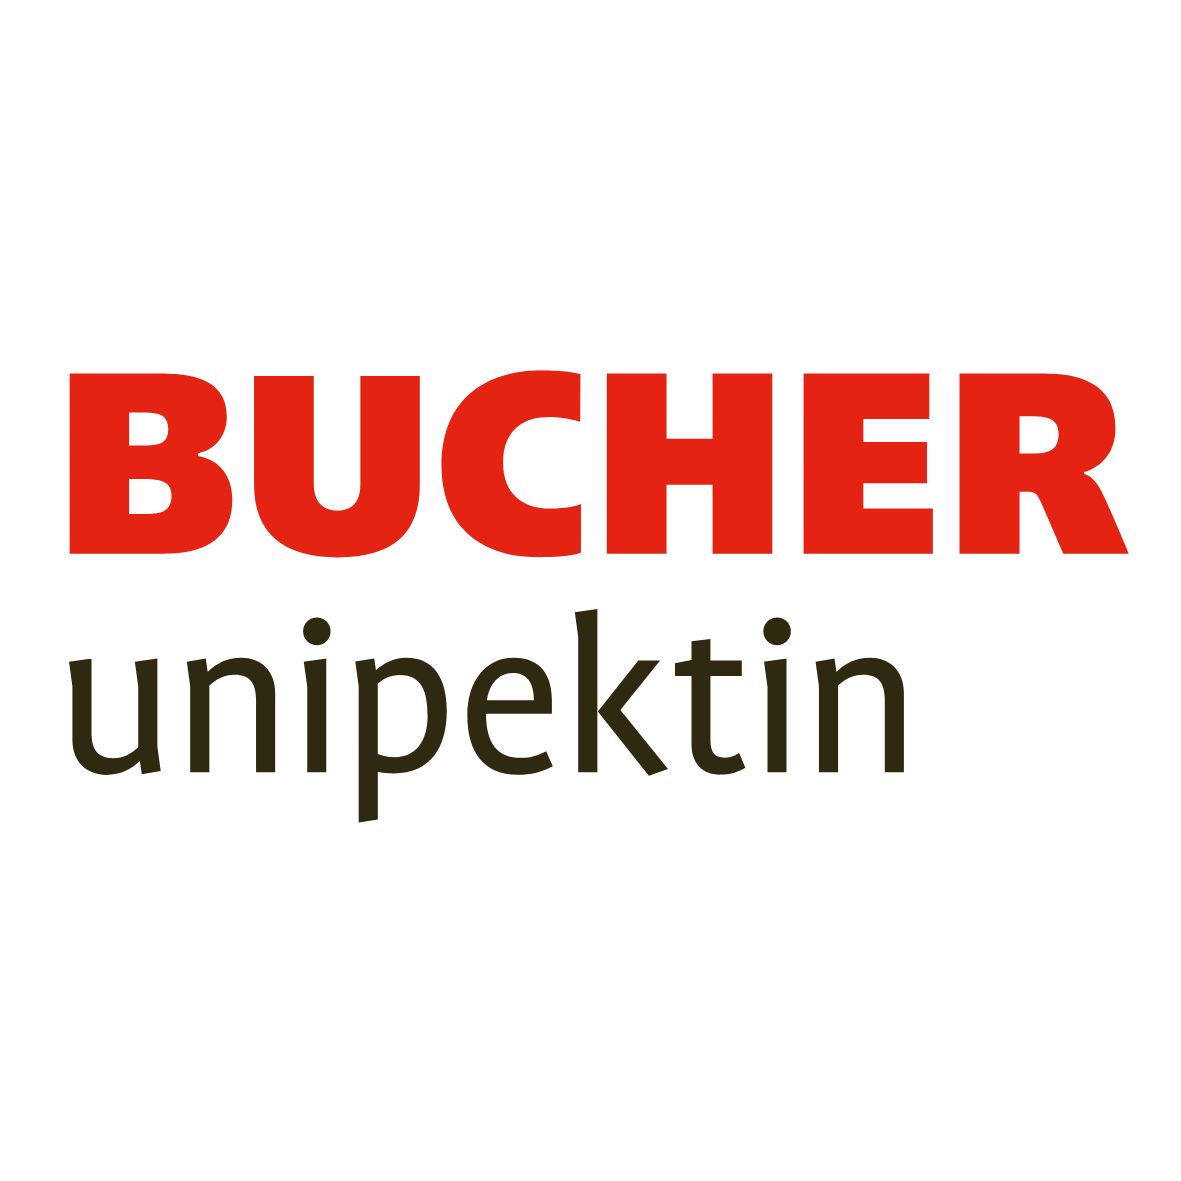 Bucher Unipektin_kwadrat